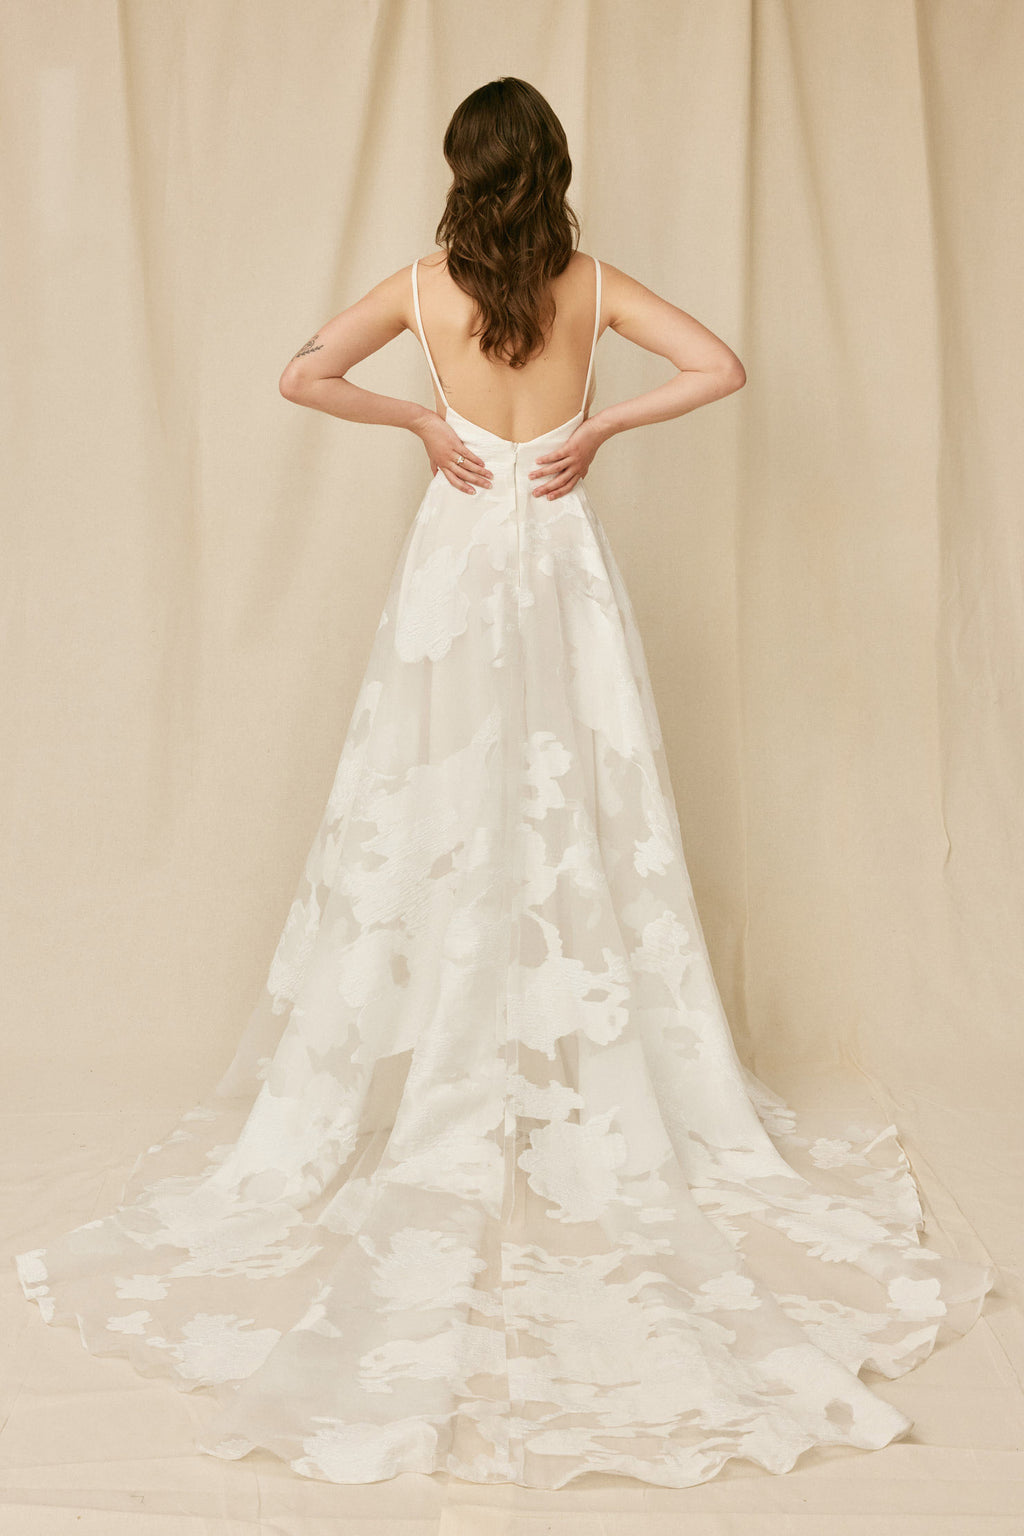 Top Ten Low Back Wedding Dresses From Casablanca Bridal / Blog